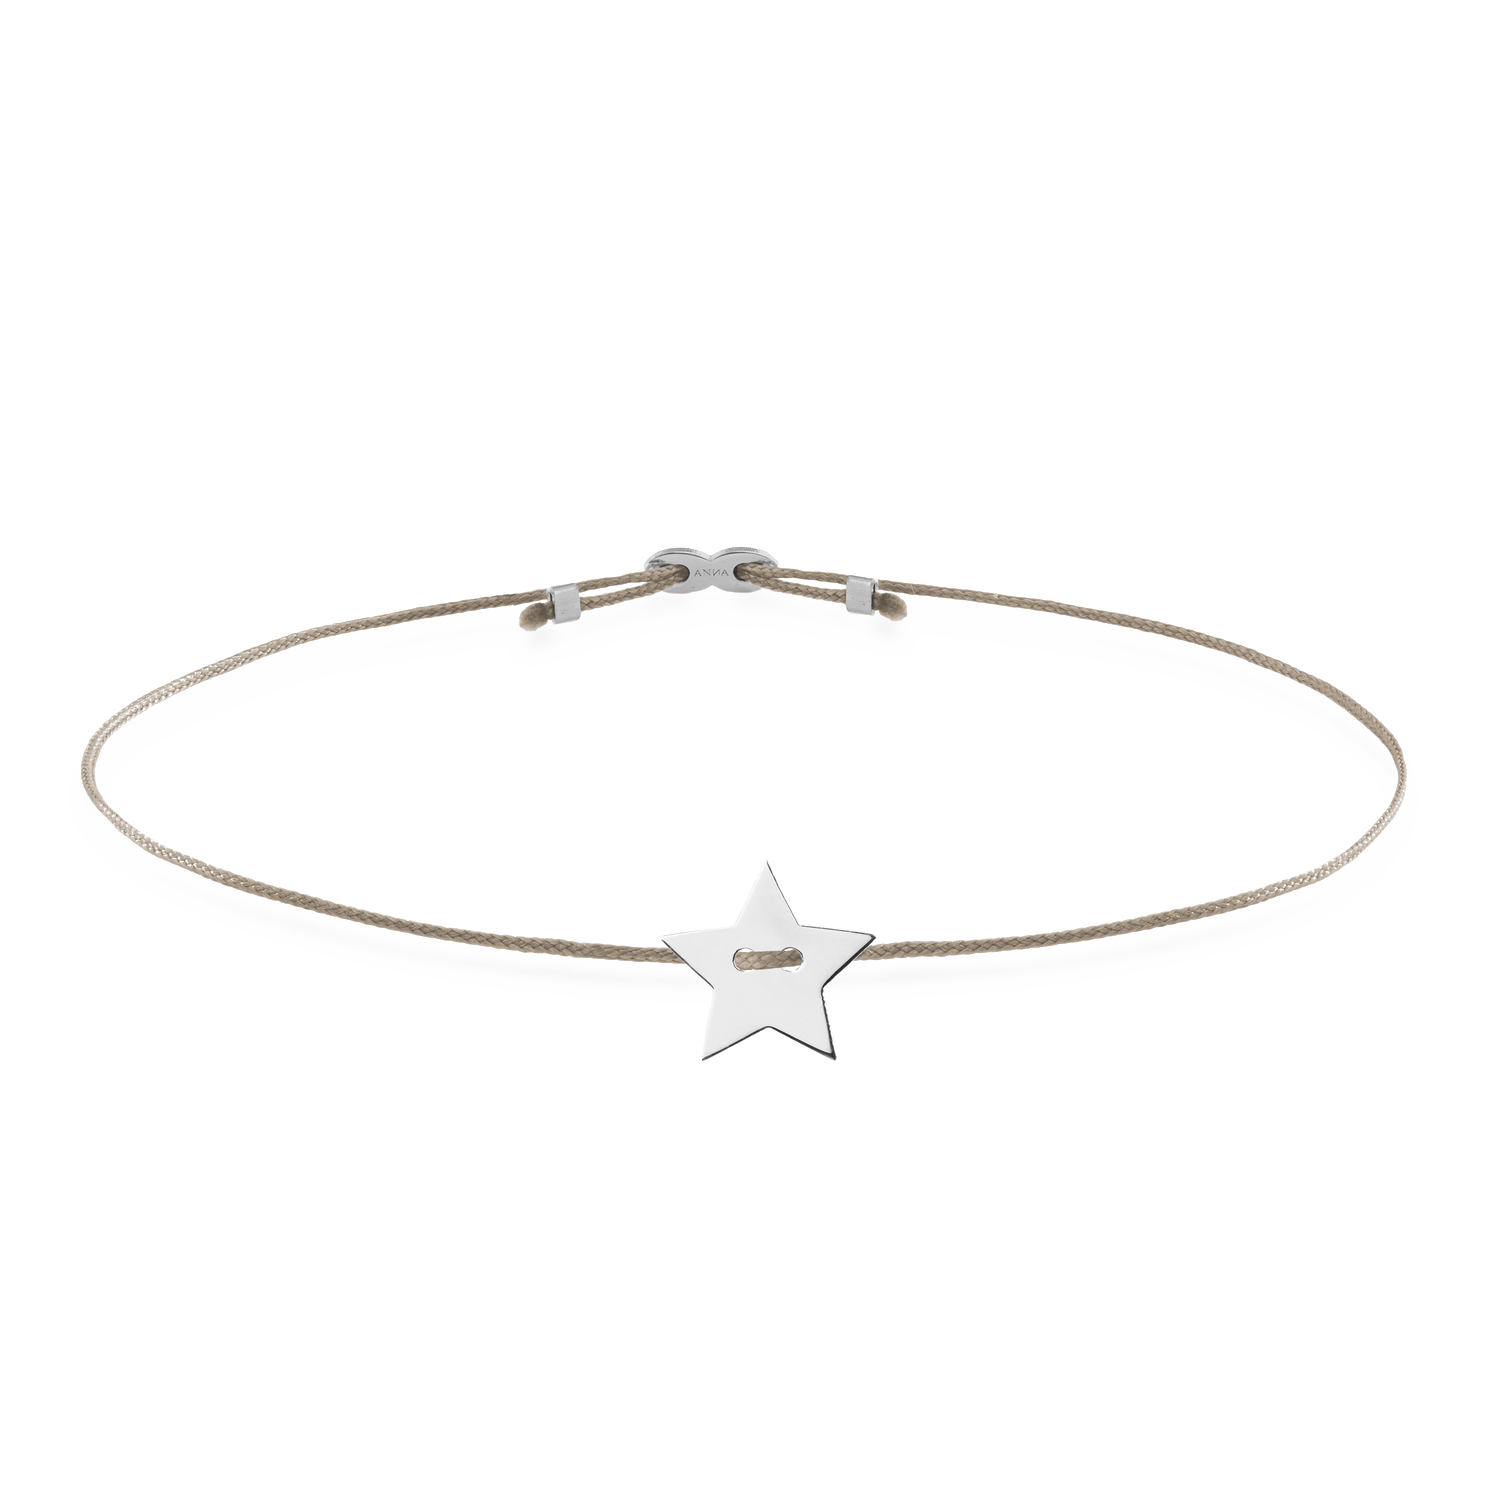 Wristband BIG STAR